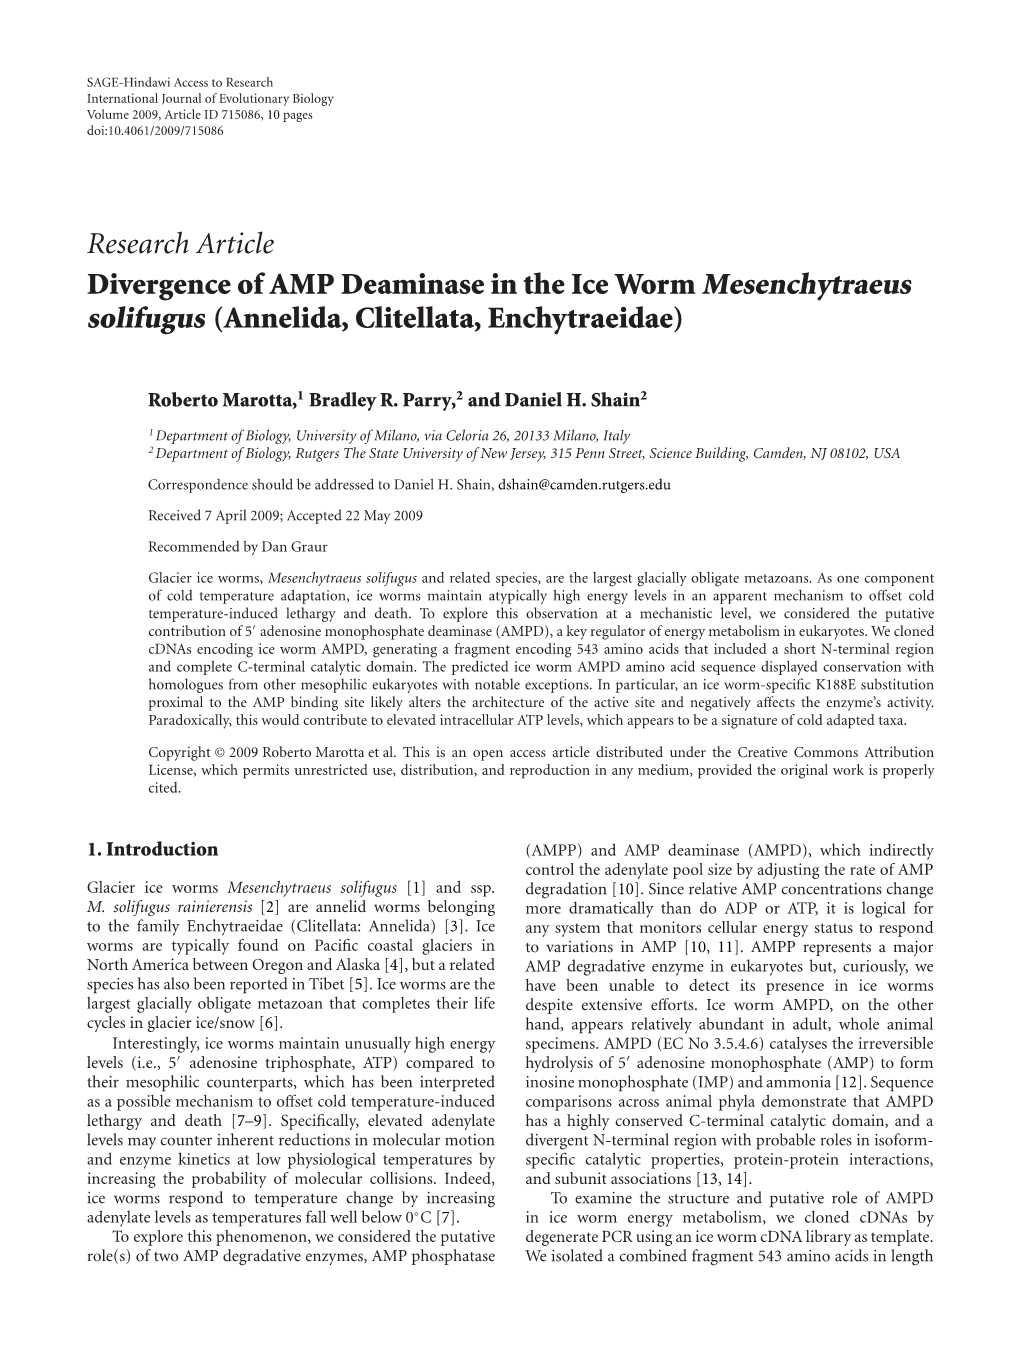 Divergence of AMP Deaminase in the Ice Worm Mesenchytraeus Solifugus (Annelida, Clitellata, Enchytraeidae)